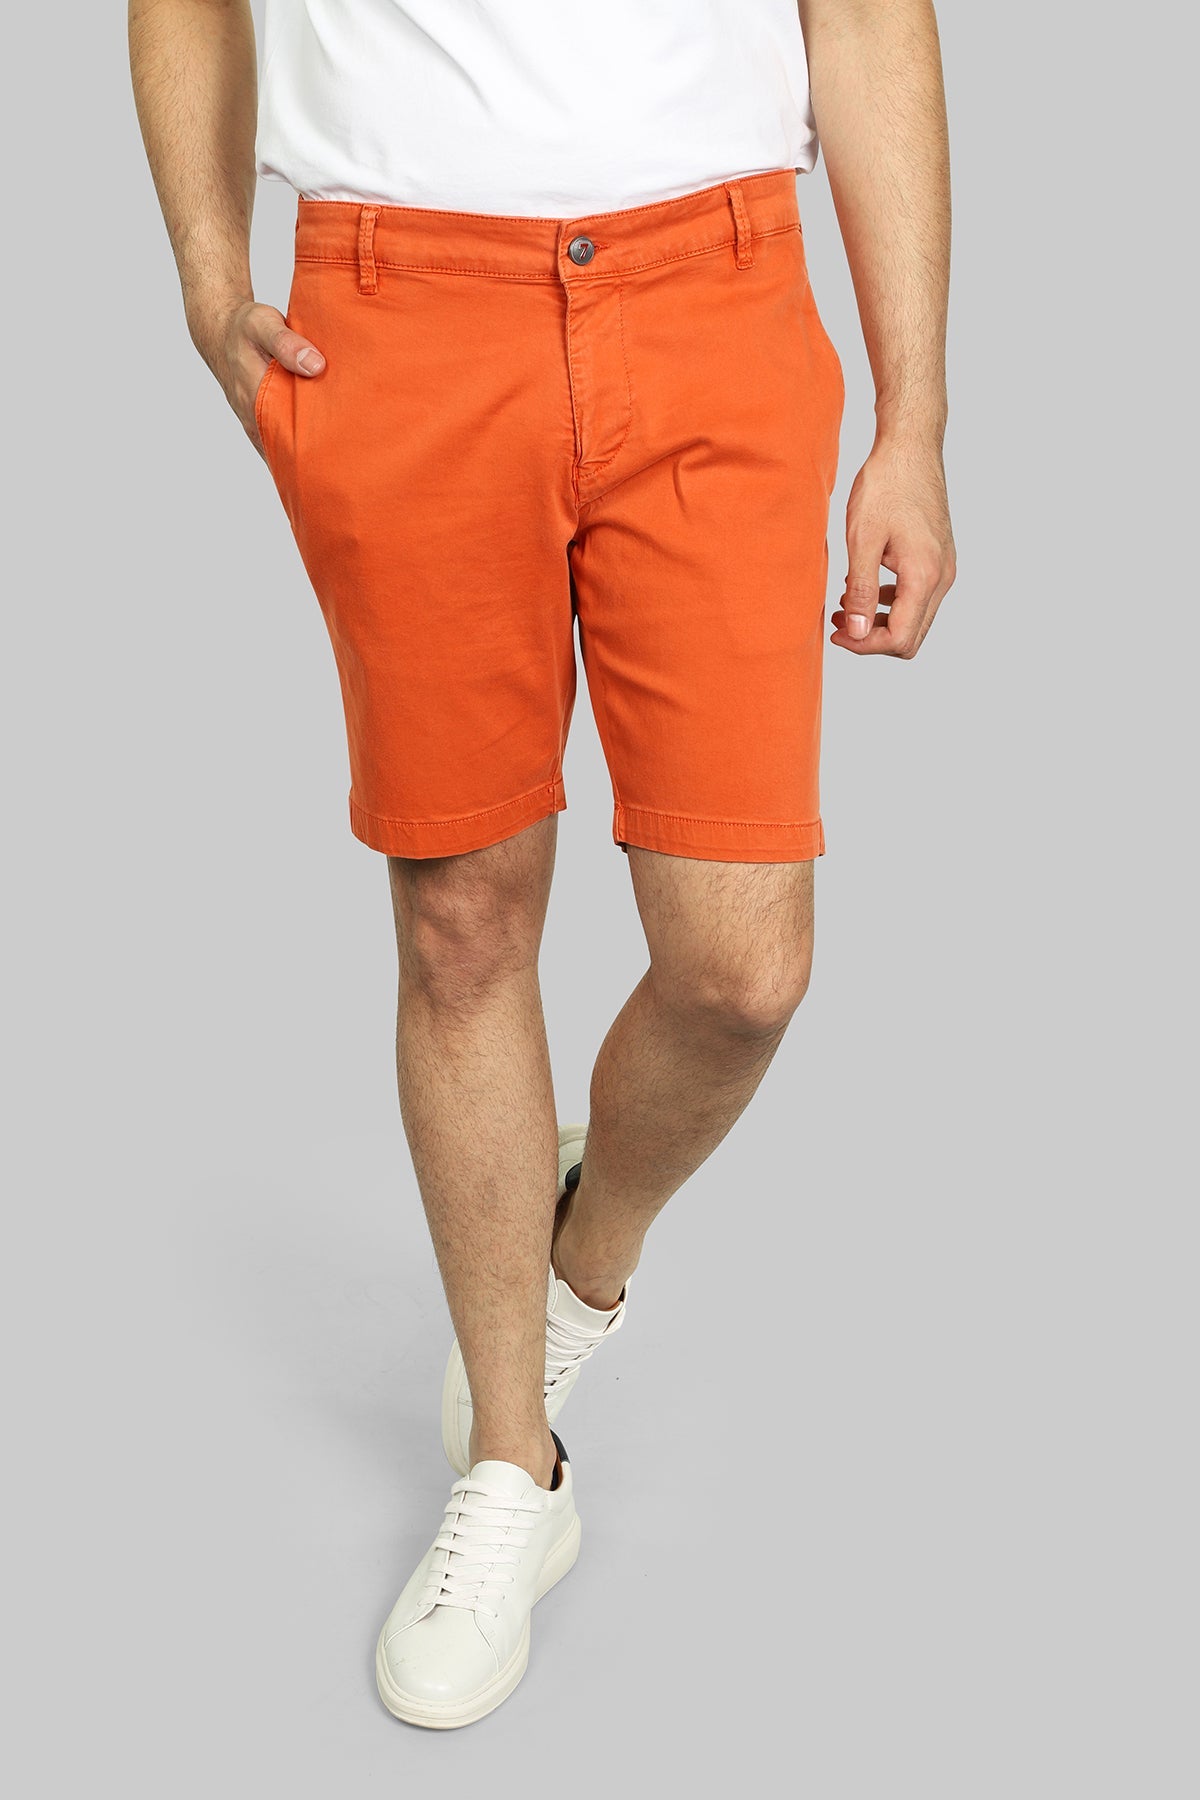 7 Downie St. -Orange Shorts